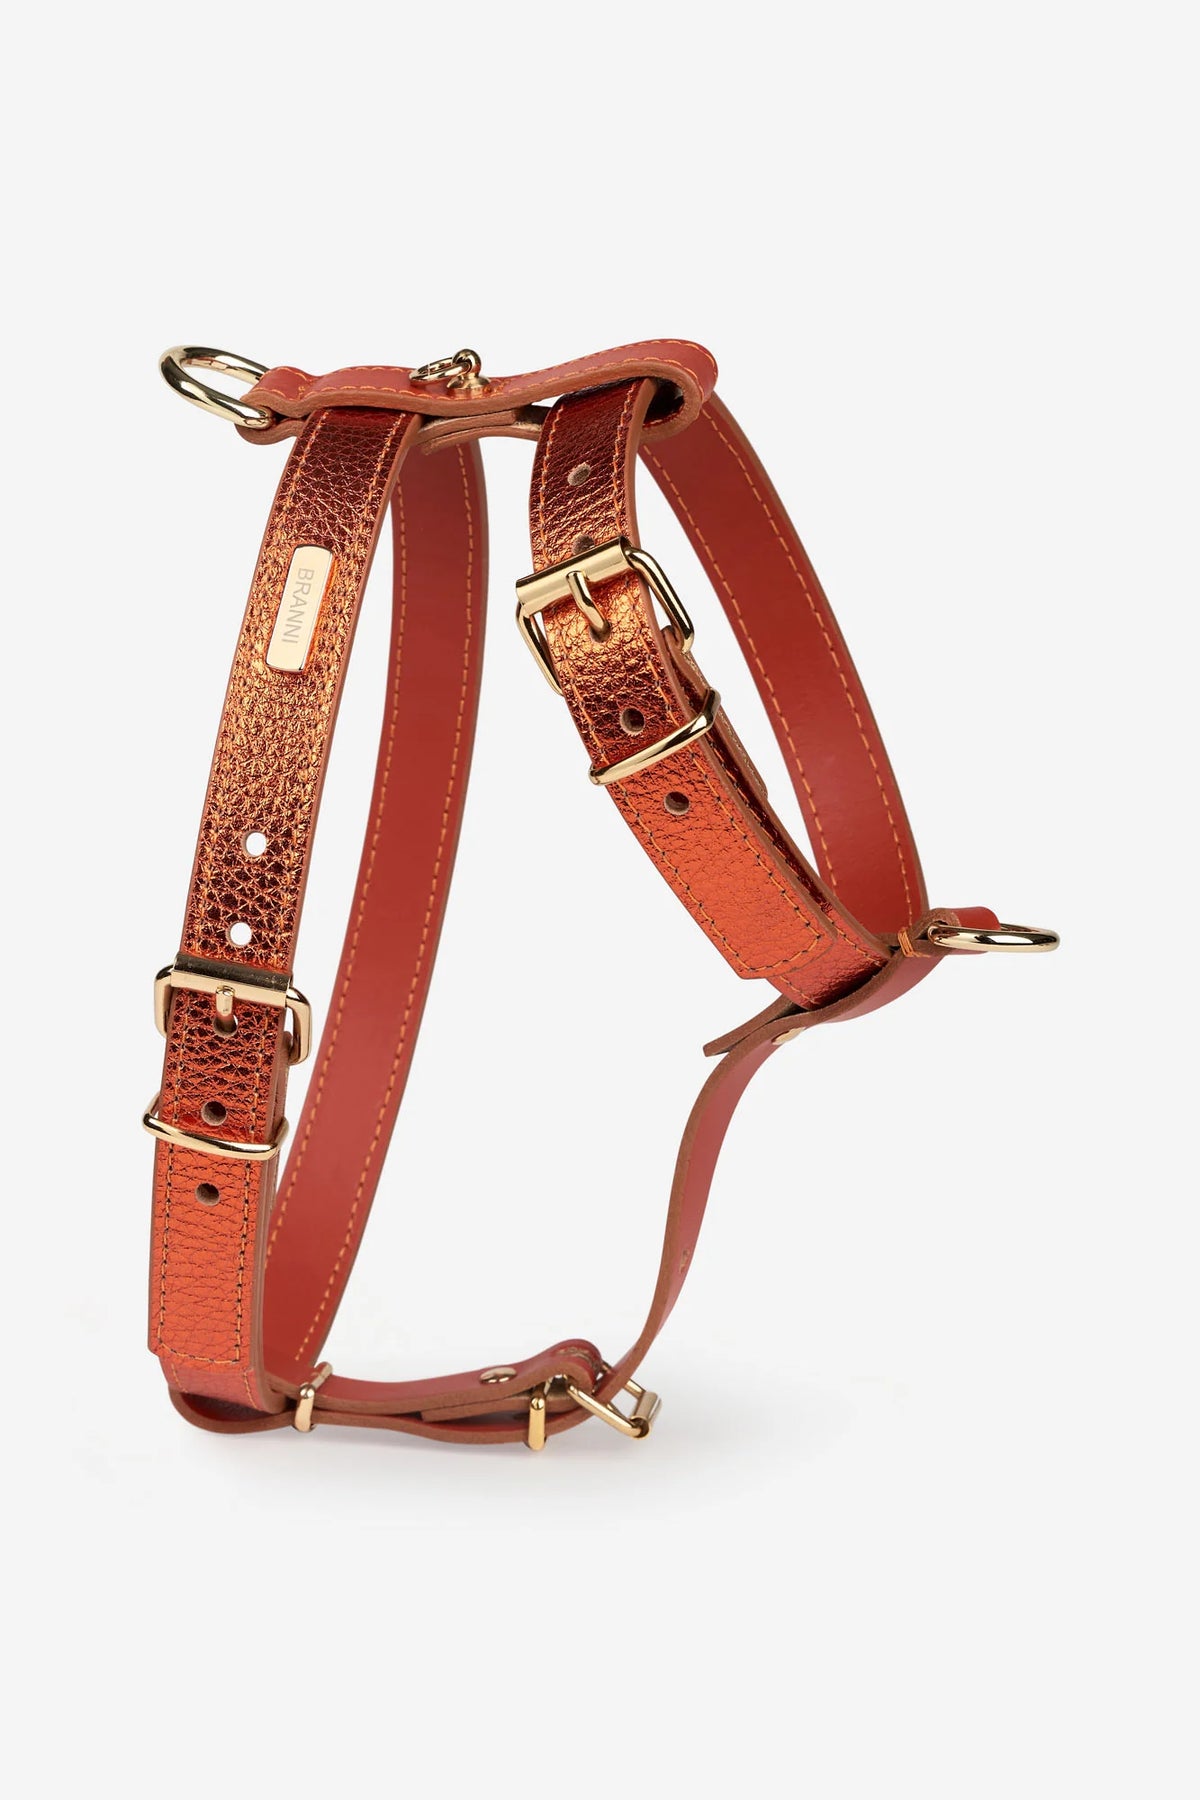 Metallic harness orange